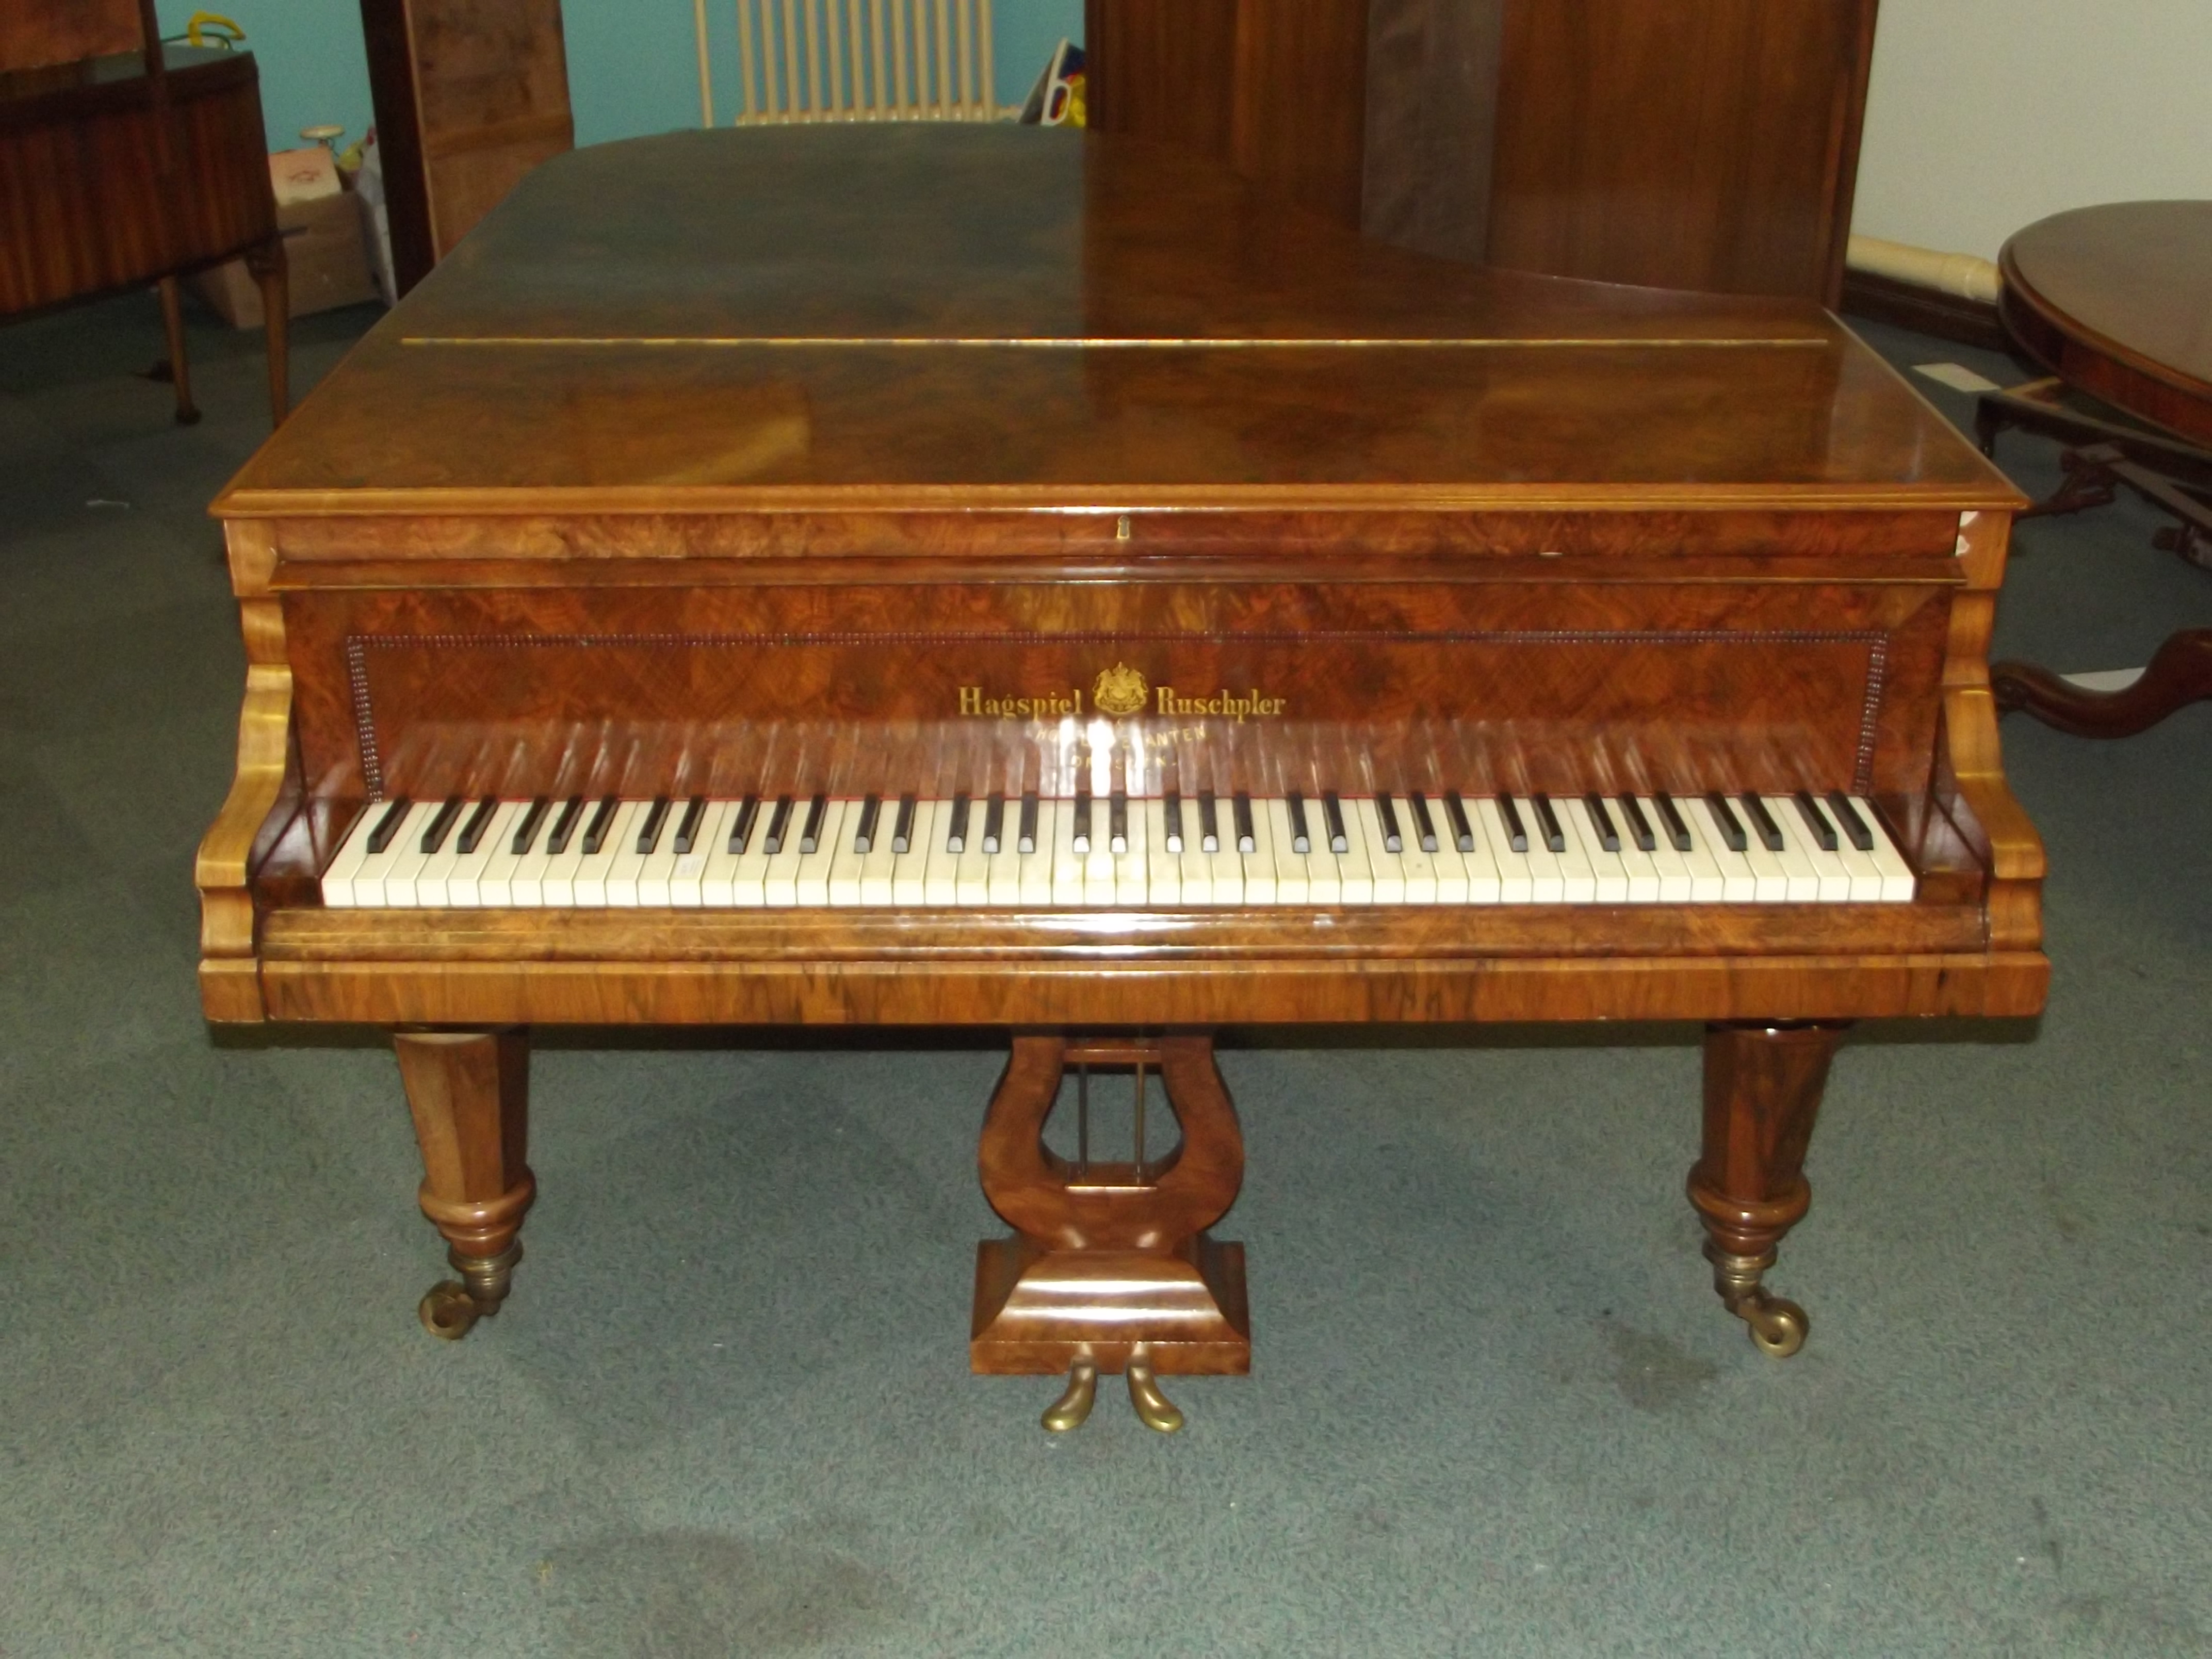 Hagspiel Ruschpler & Hof-Lieferanten Dresden walnut baby grand piano. Length 176 cm, width 137cm